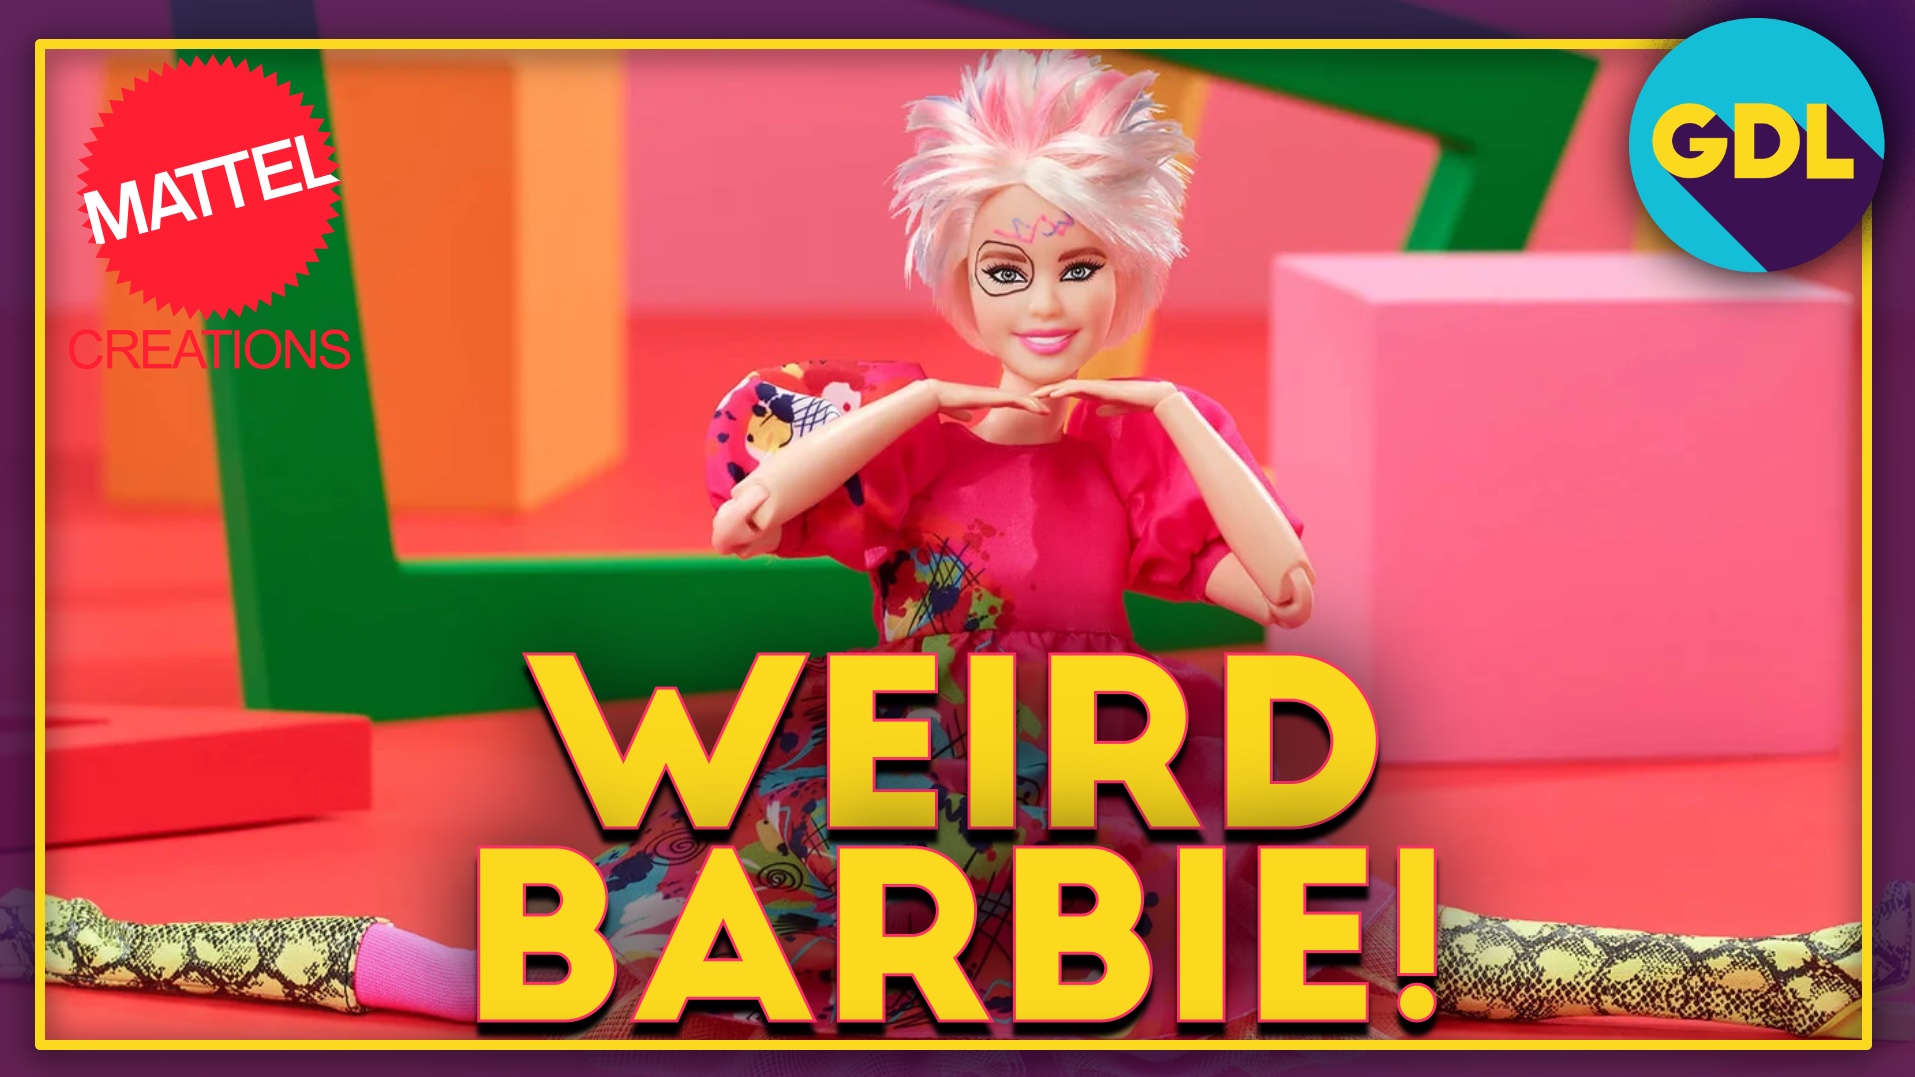 The Barbie Movie's Weird Barbie Pre-Orders on Mattel Creations